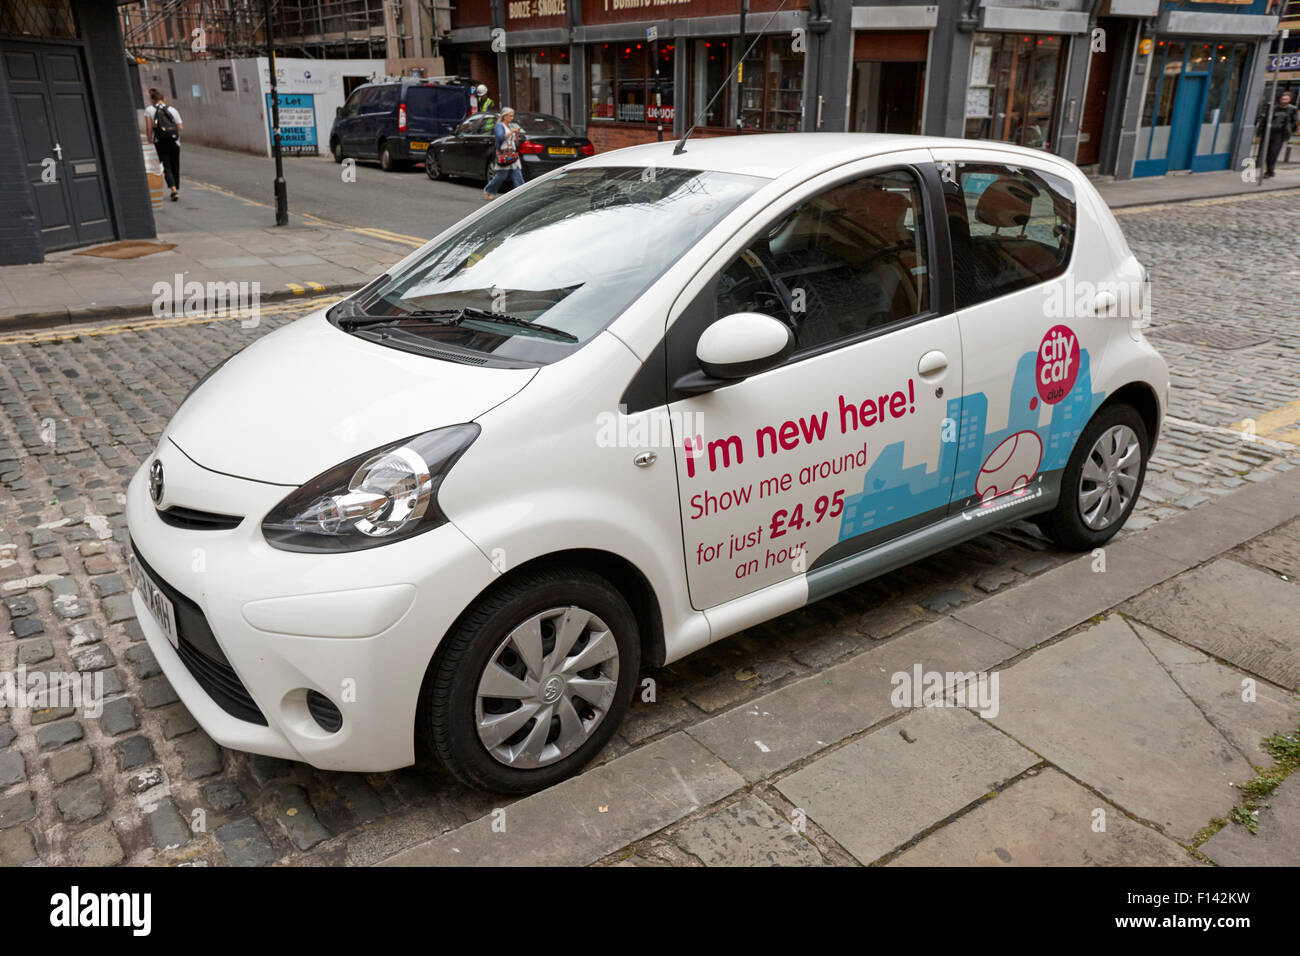 city car club toyota car sharing scheme in Northern quarter Manchester uk Stock Photo